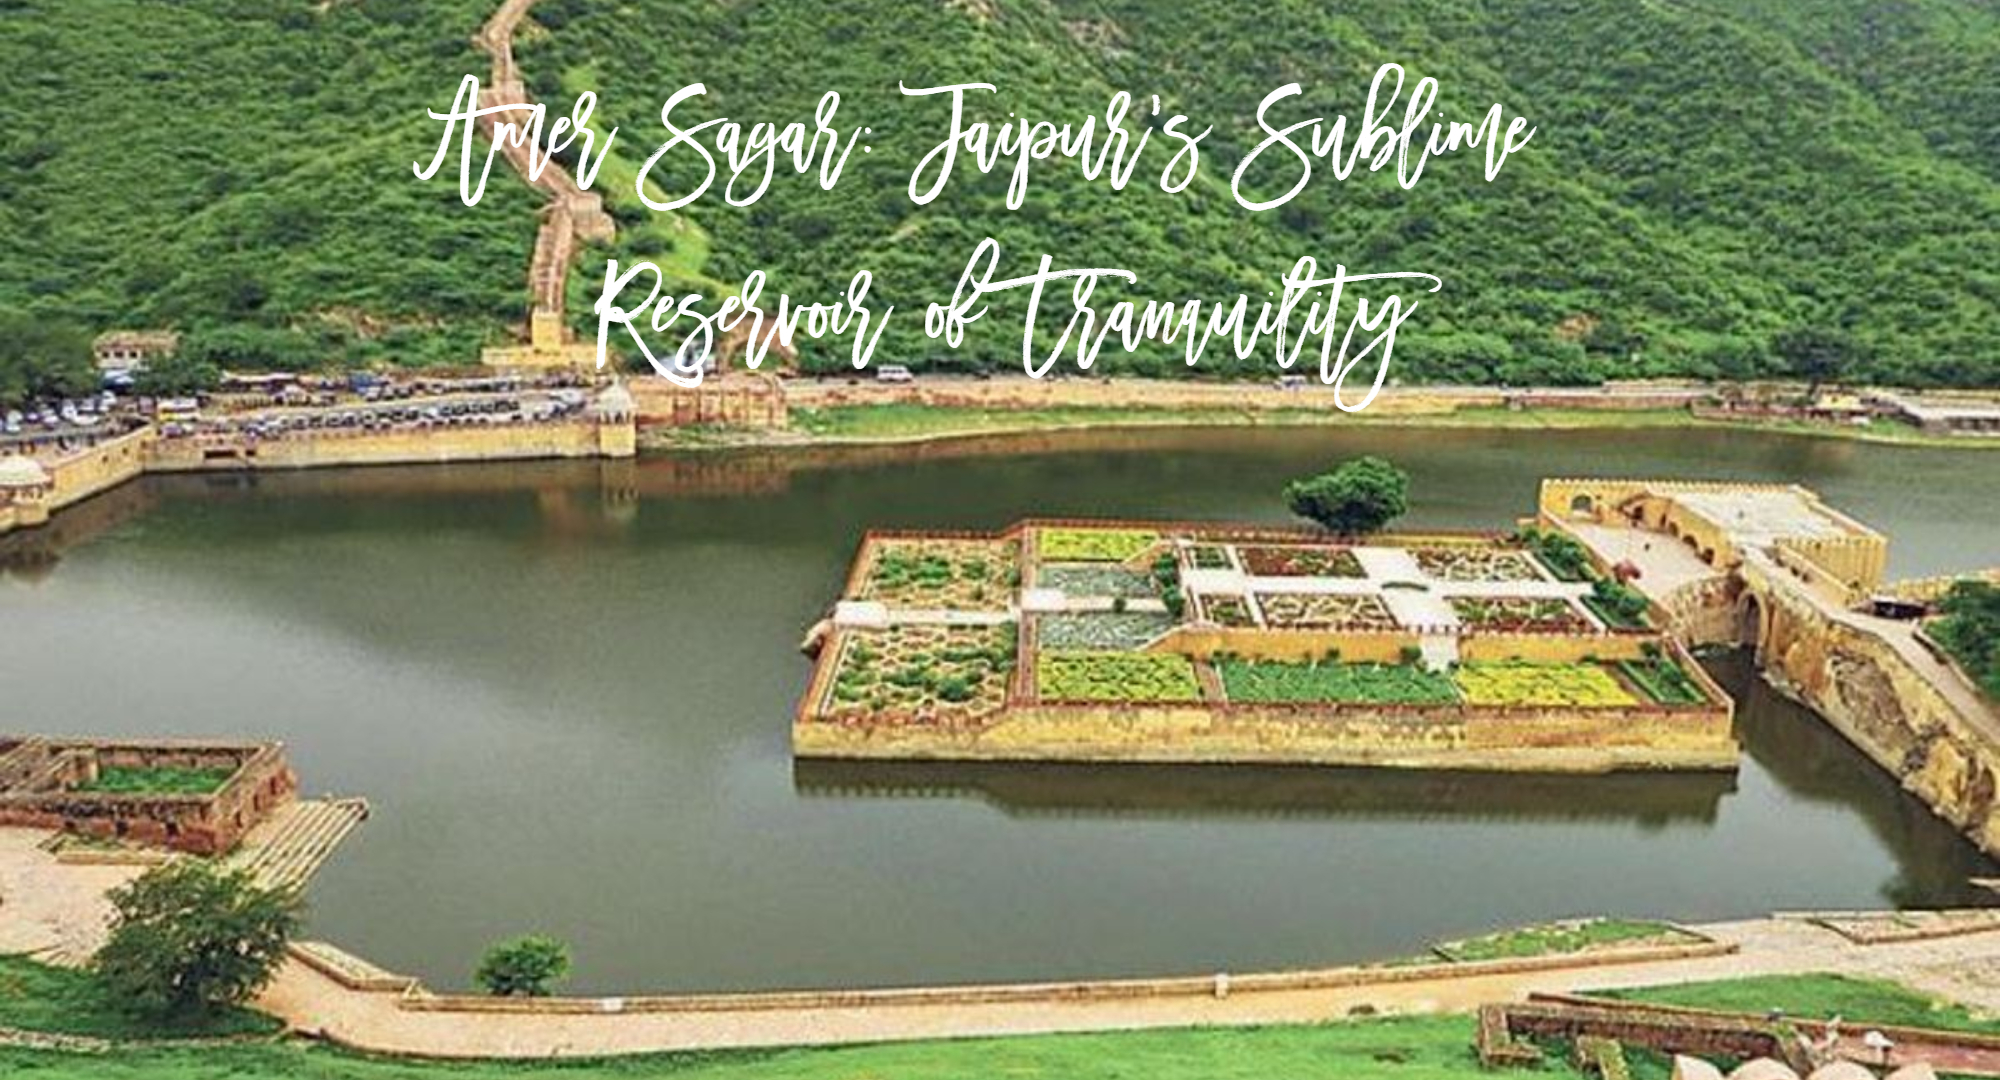 places to visit in jaipur, amer sagar jaipur, rajasthan travels